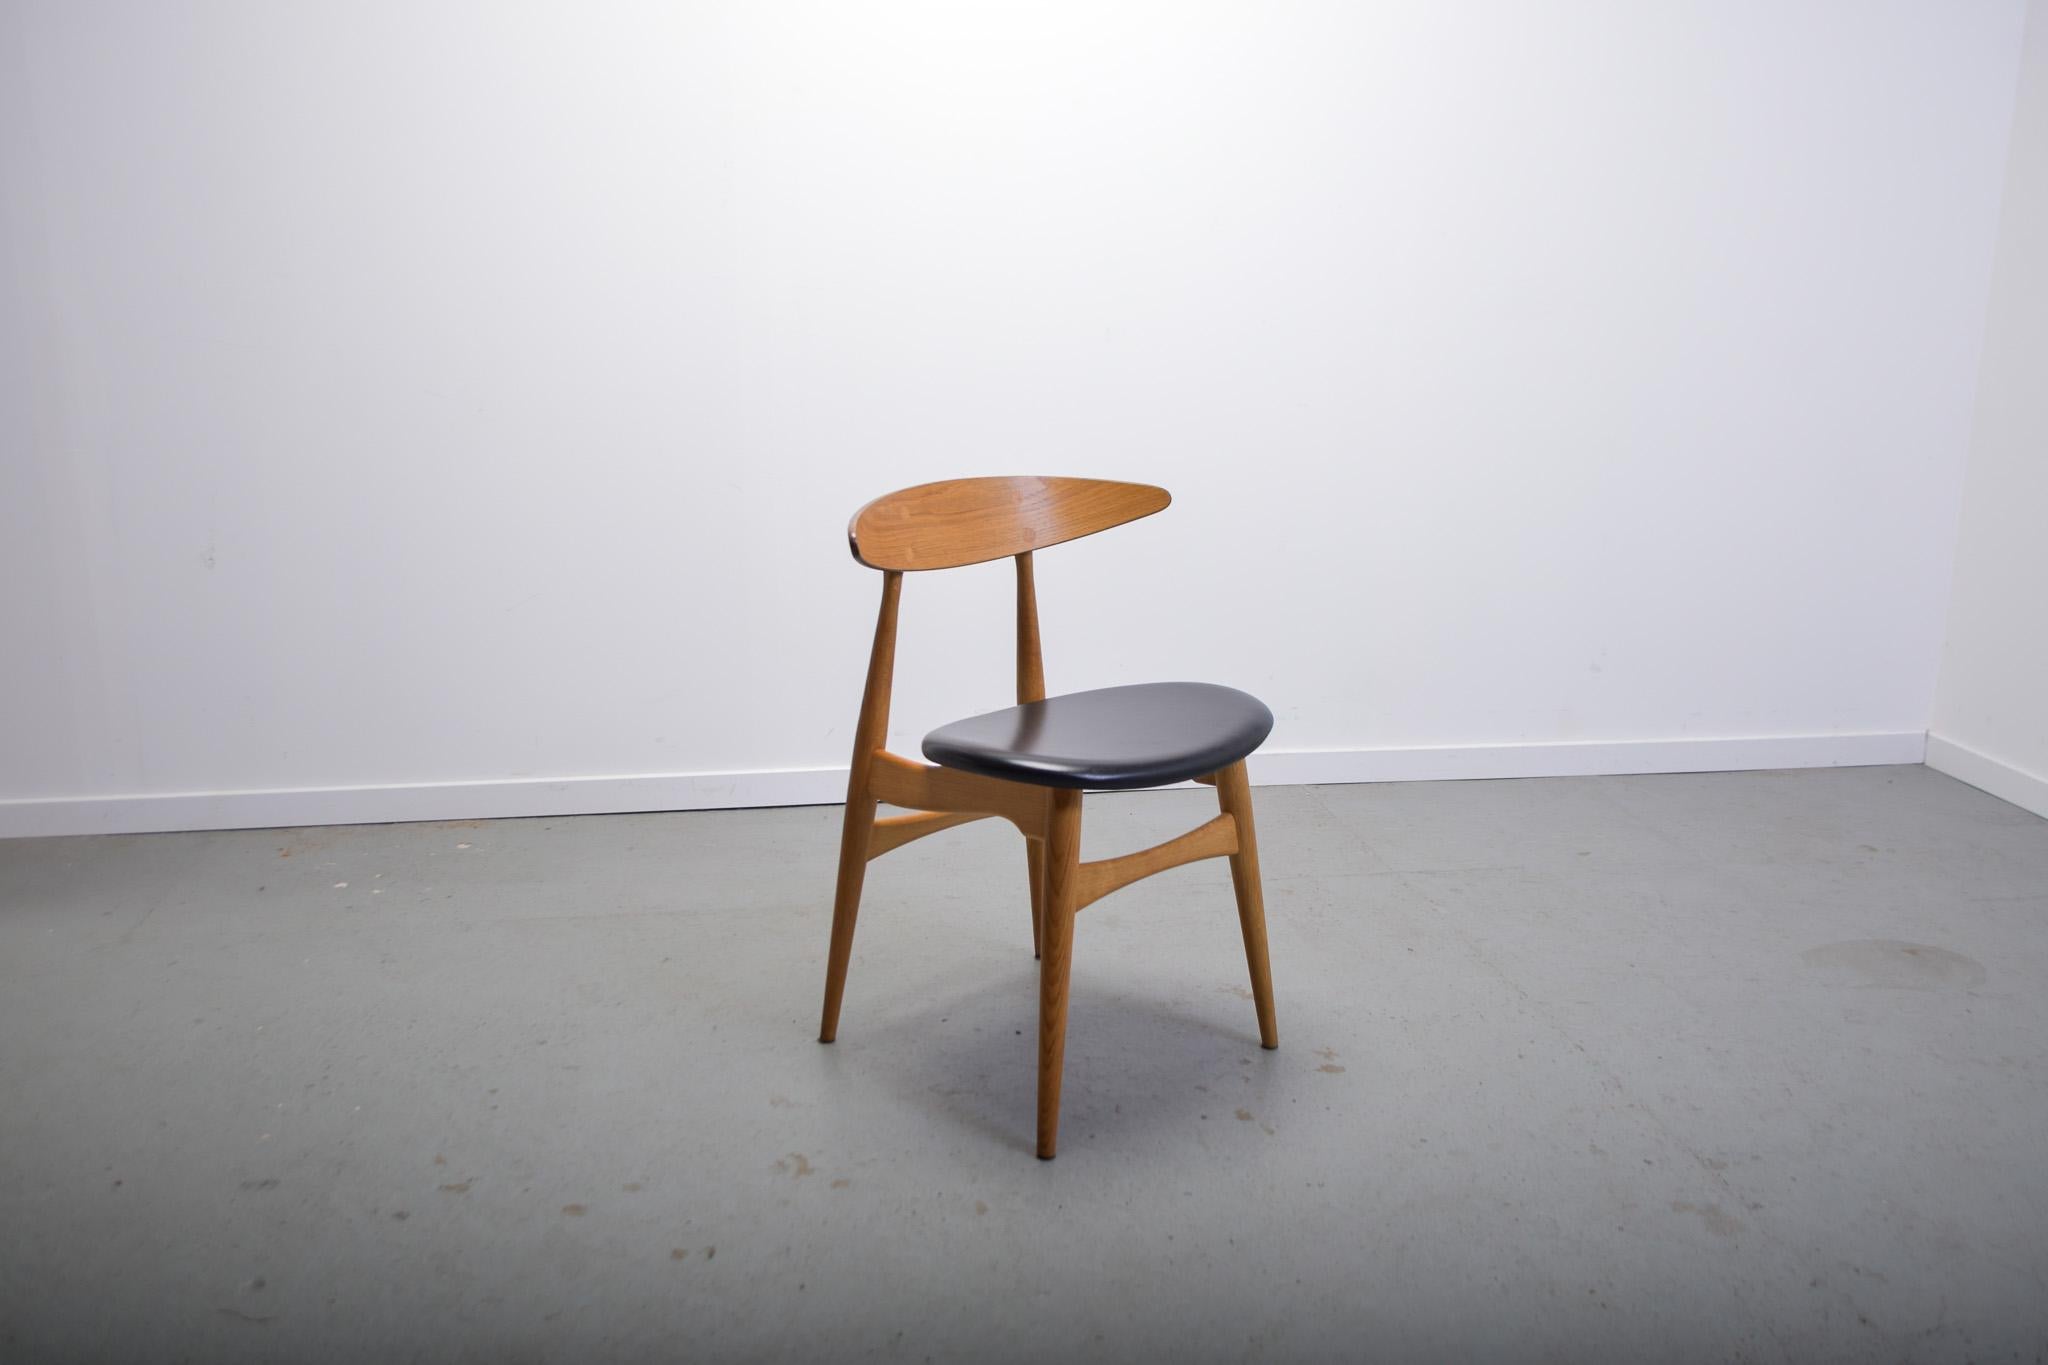 Mid-20th Century CH33 dining chairs designed by Hans J. Wegner for Carl Hansen